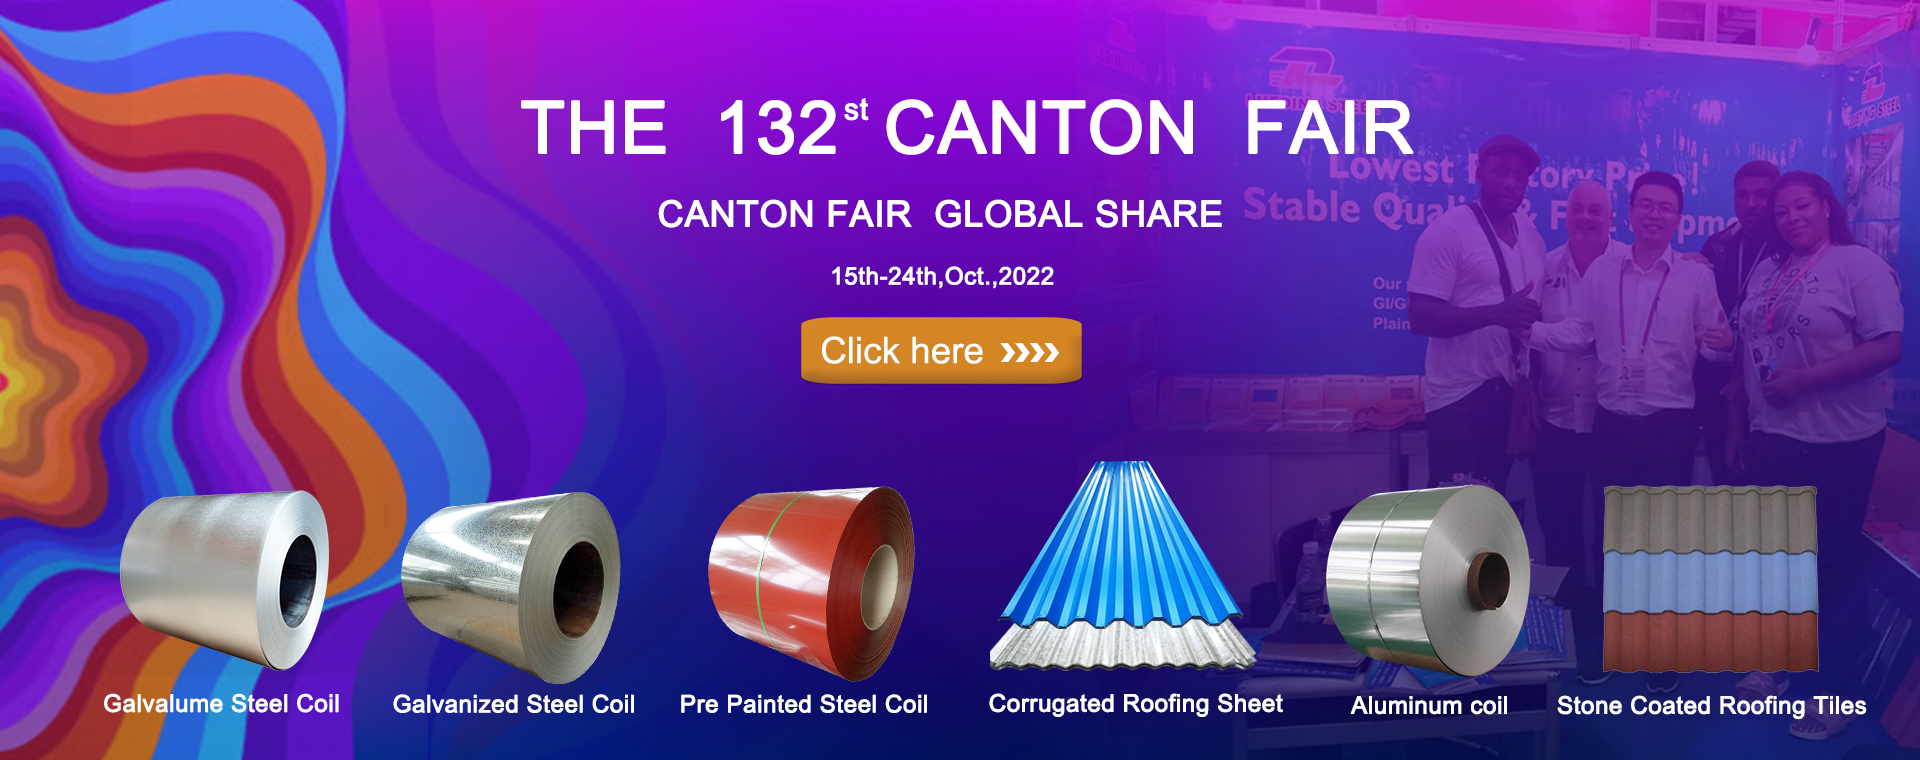 132st Canton Fair